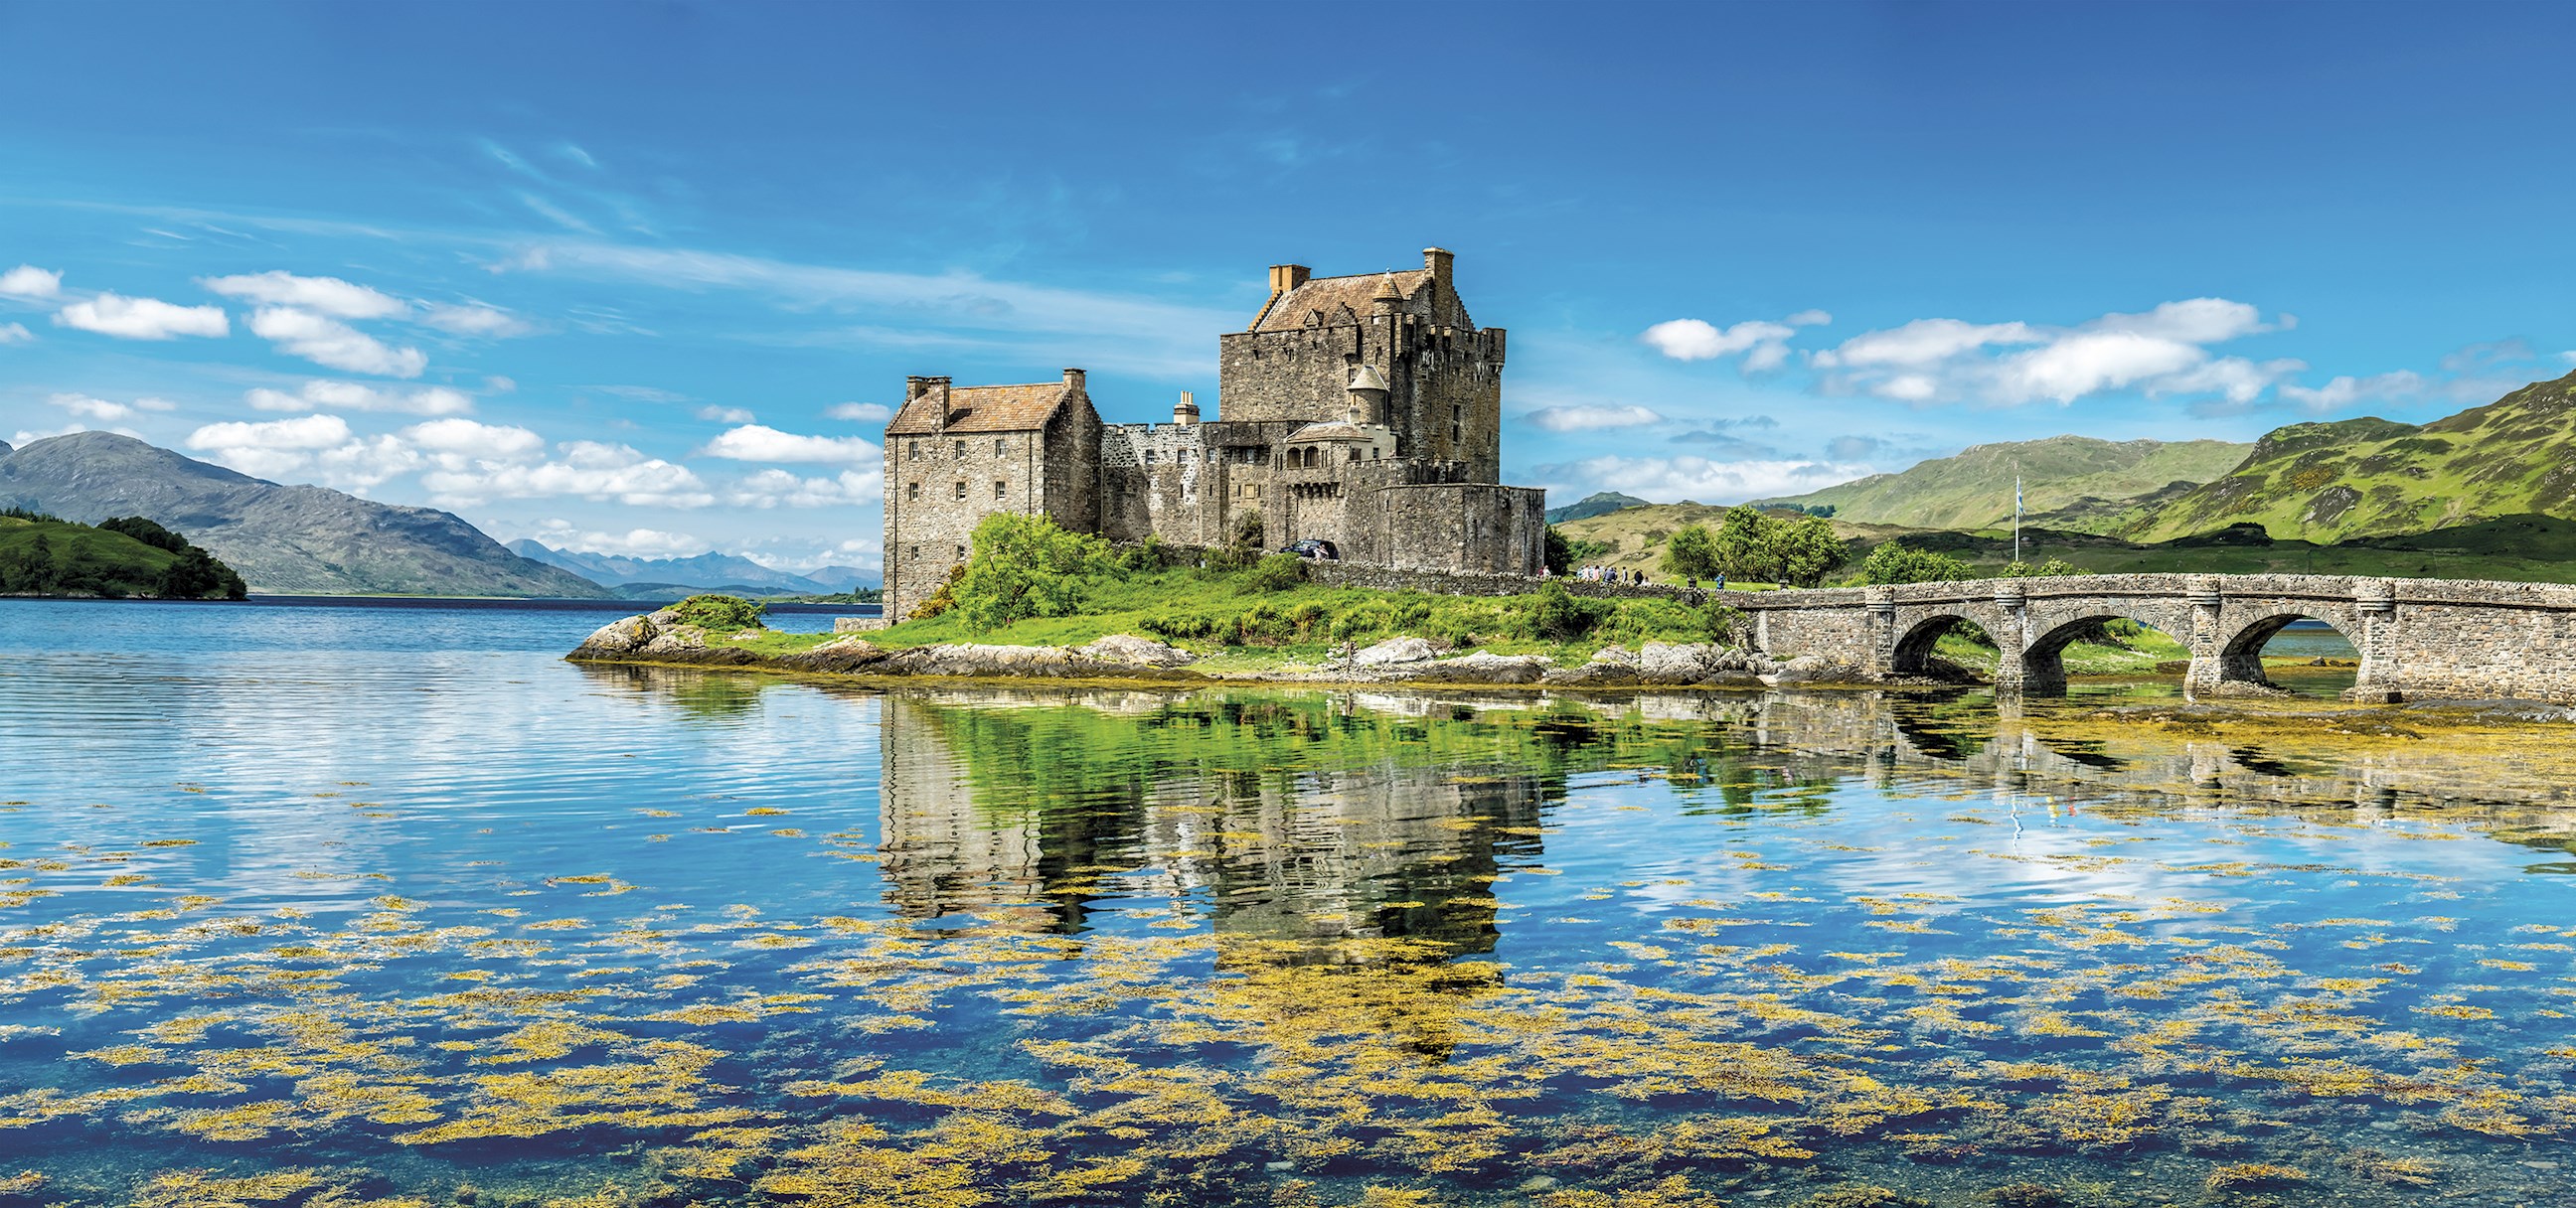 insight tours ireland and scotland